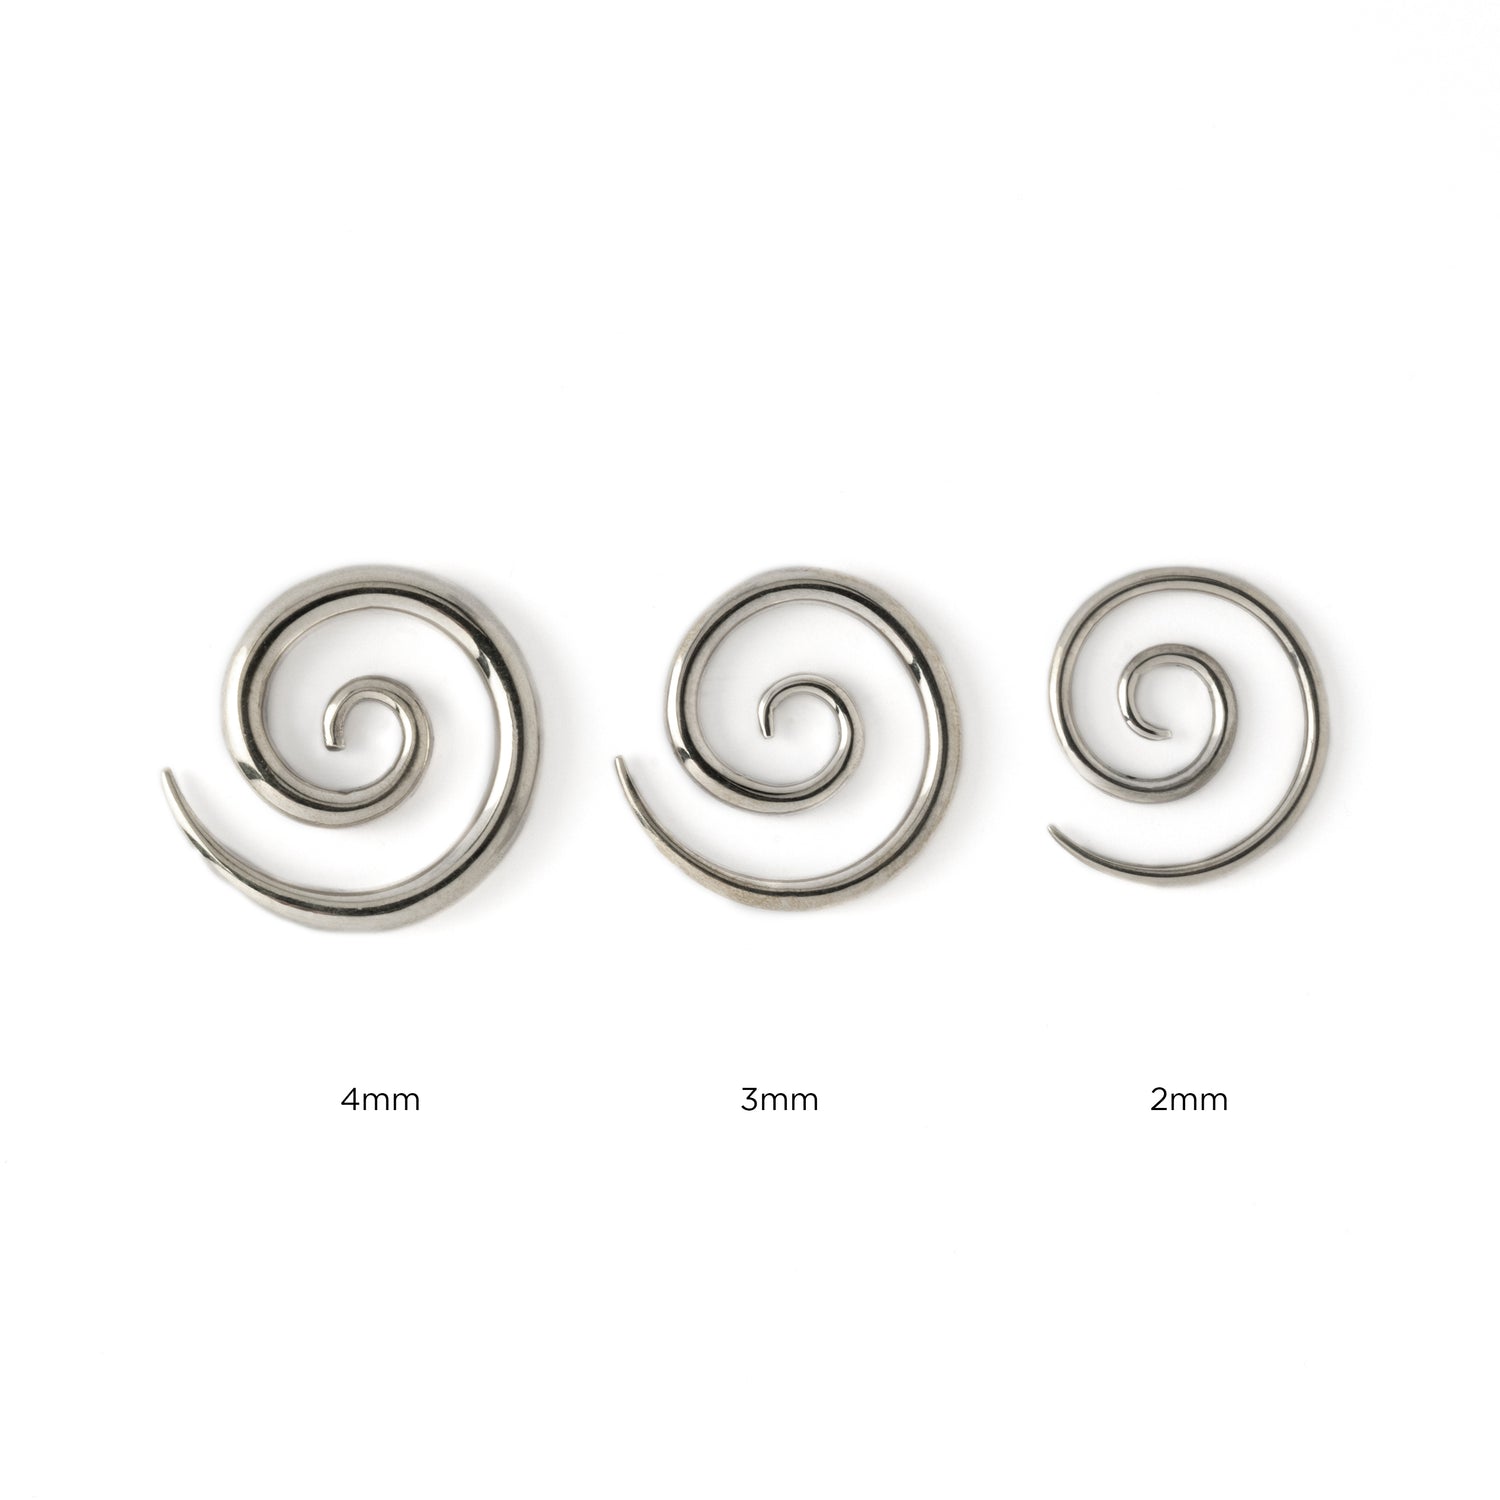 2mm, 3mm, 4mm silver spiral gauge earrings side view